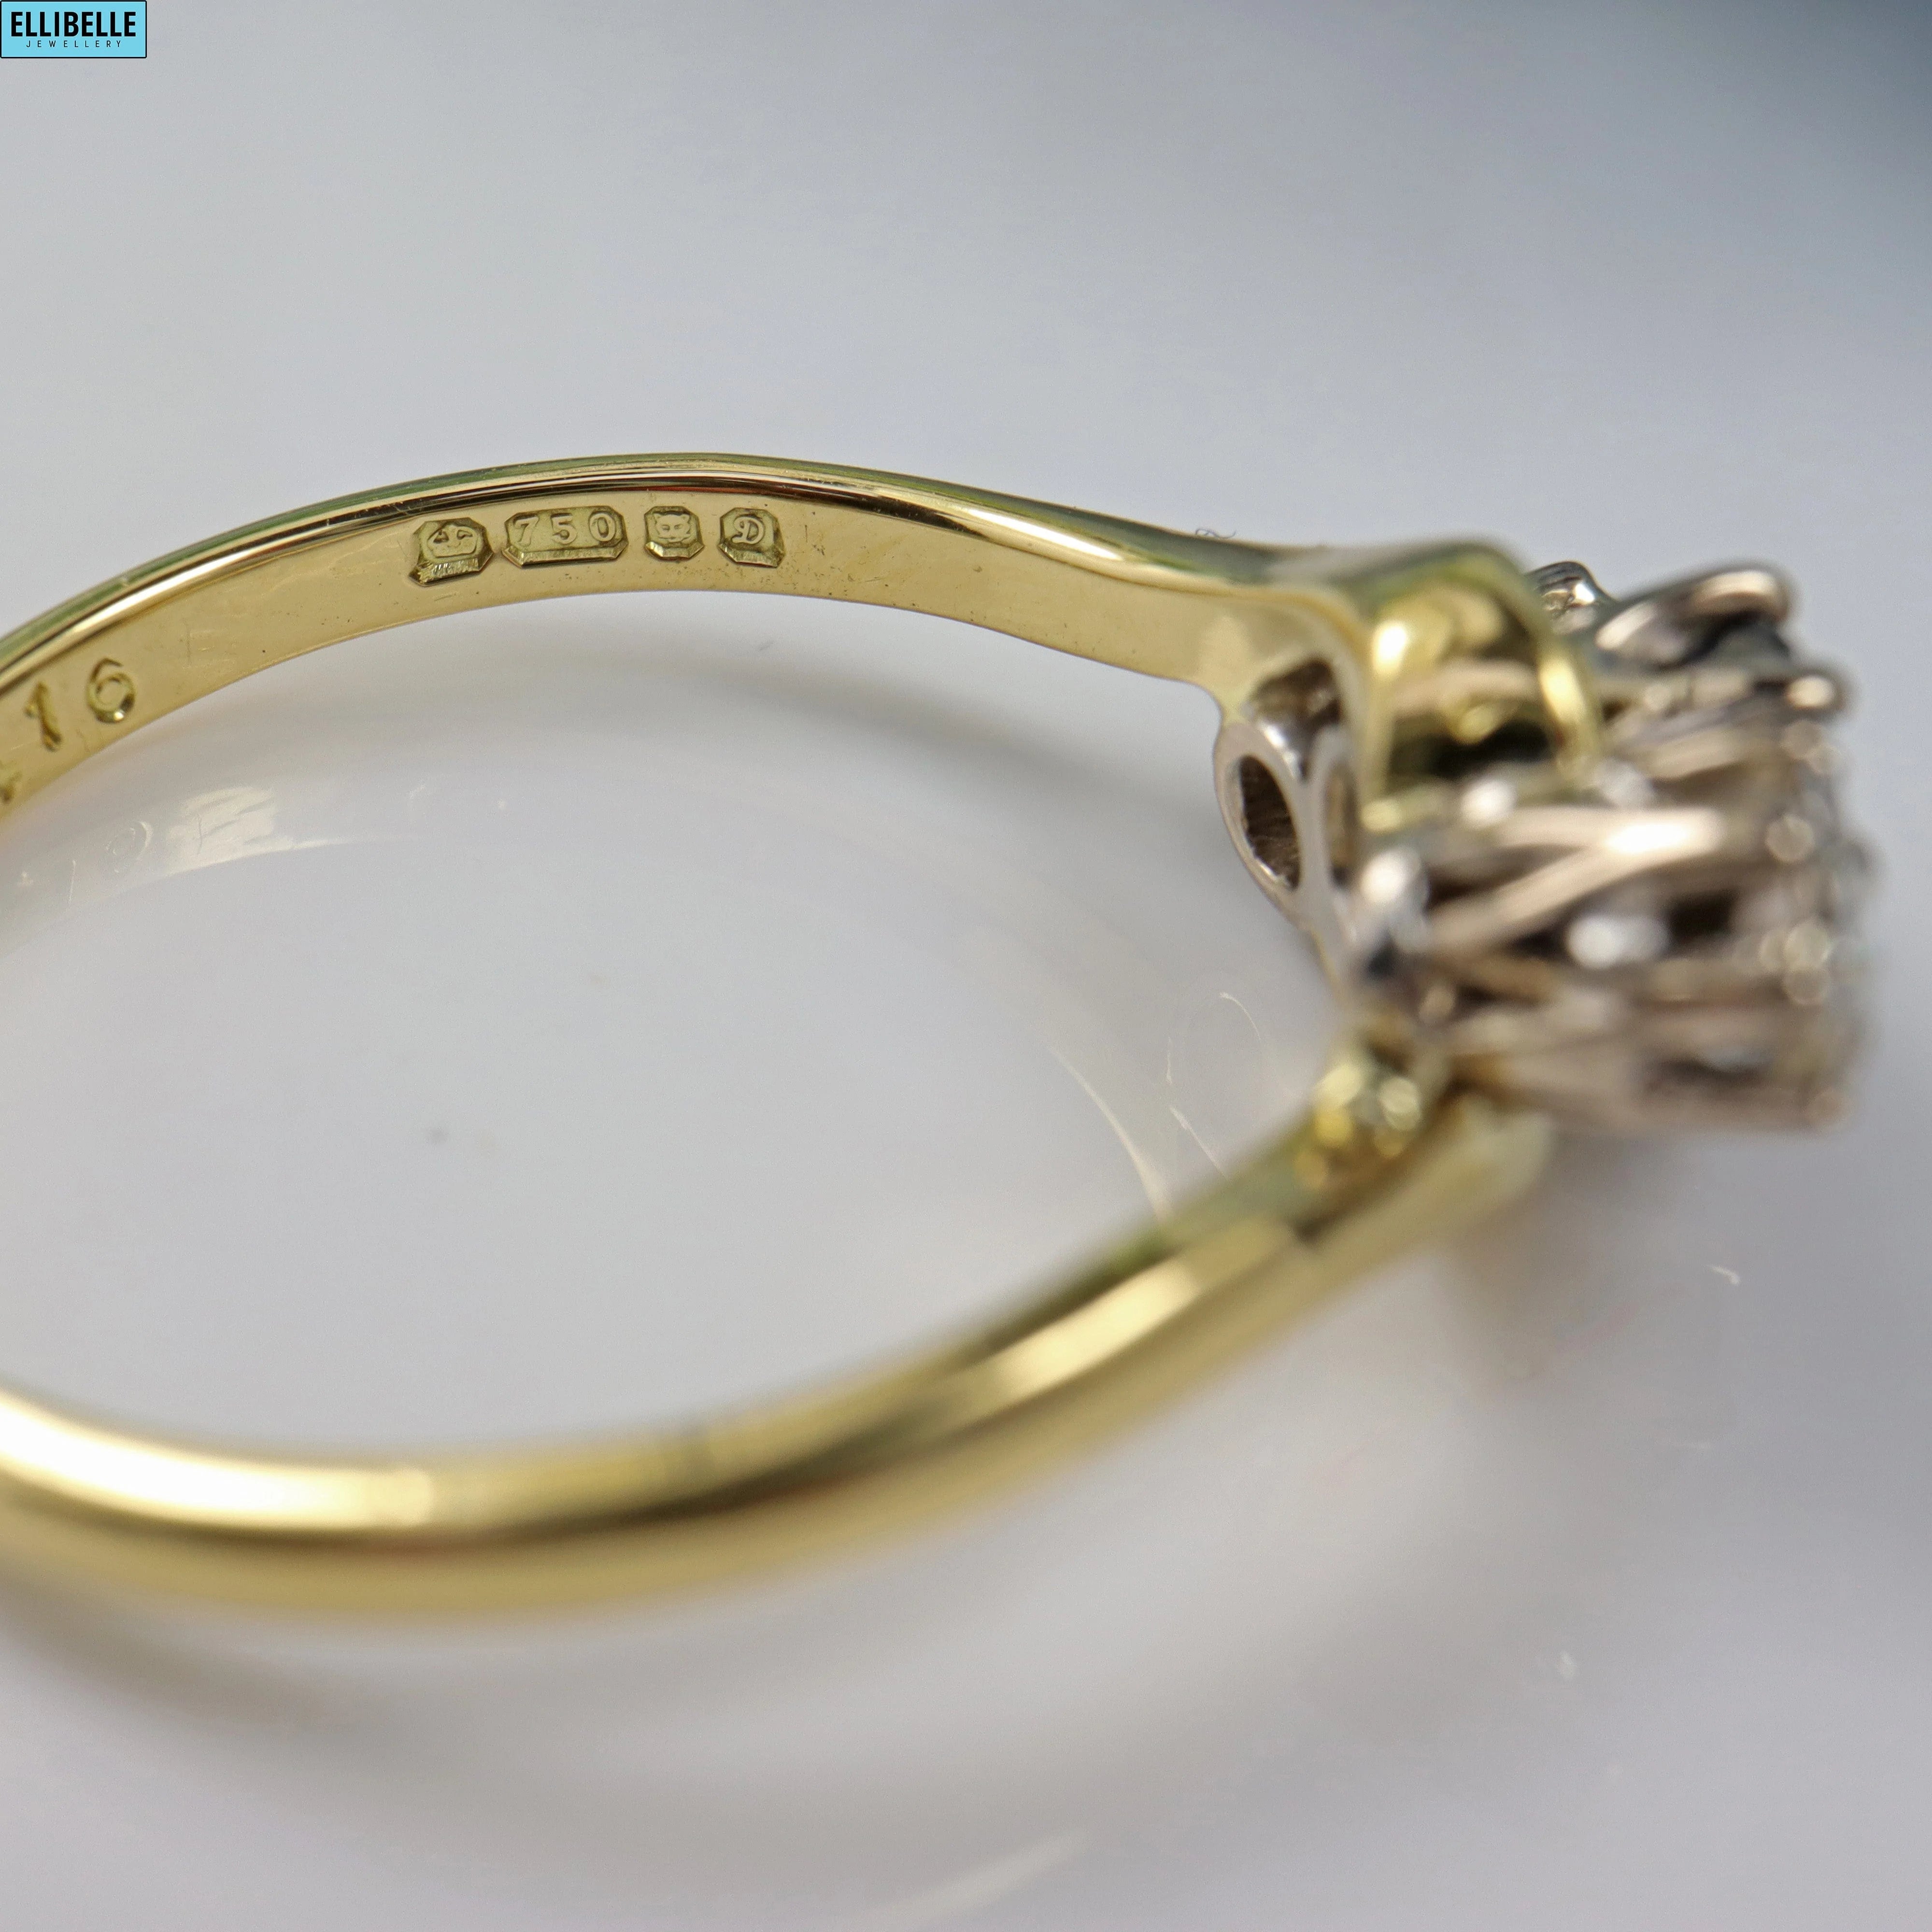 Ellibelle Jewellery EDWARDIAN STYLE SAPPHIRE & DIAMOND 18CT GOLD BYPASS RING